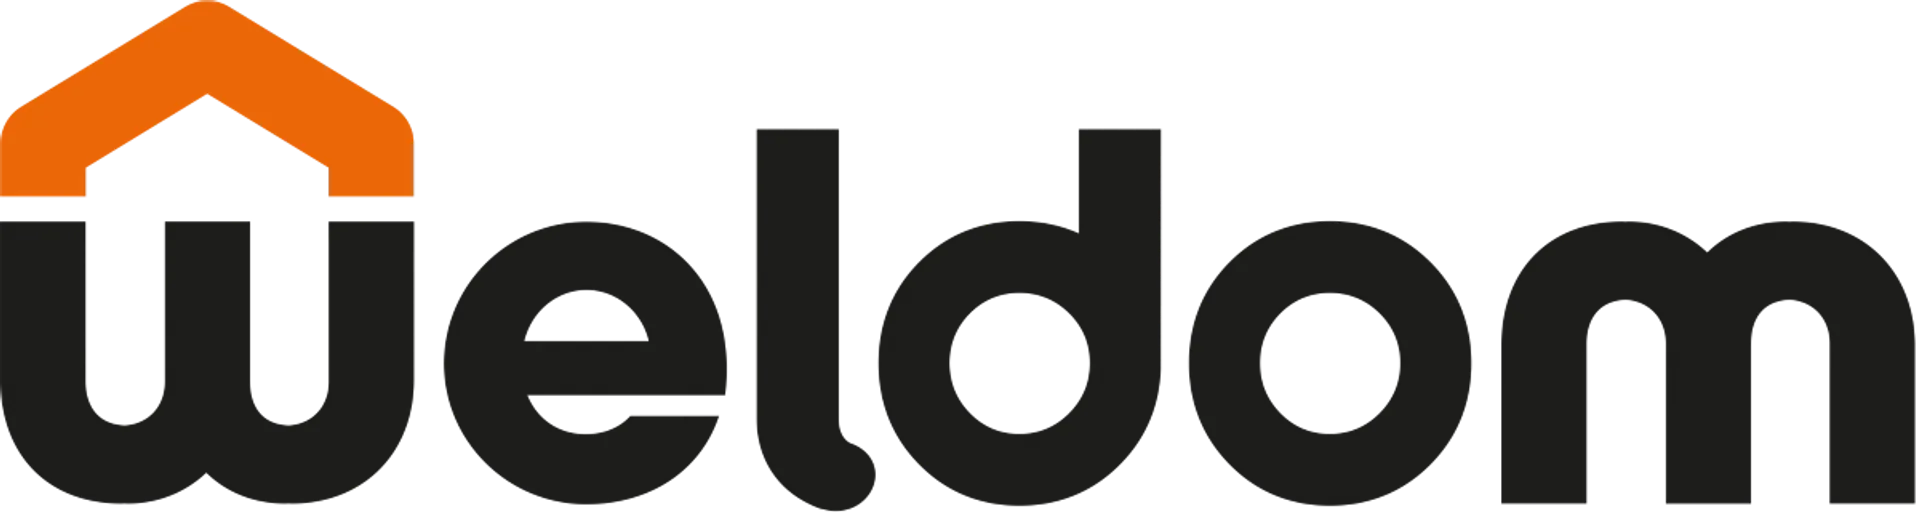 WELDOM logo